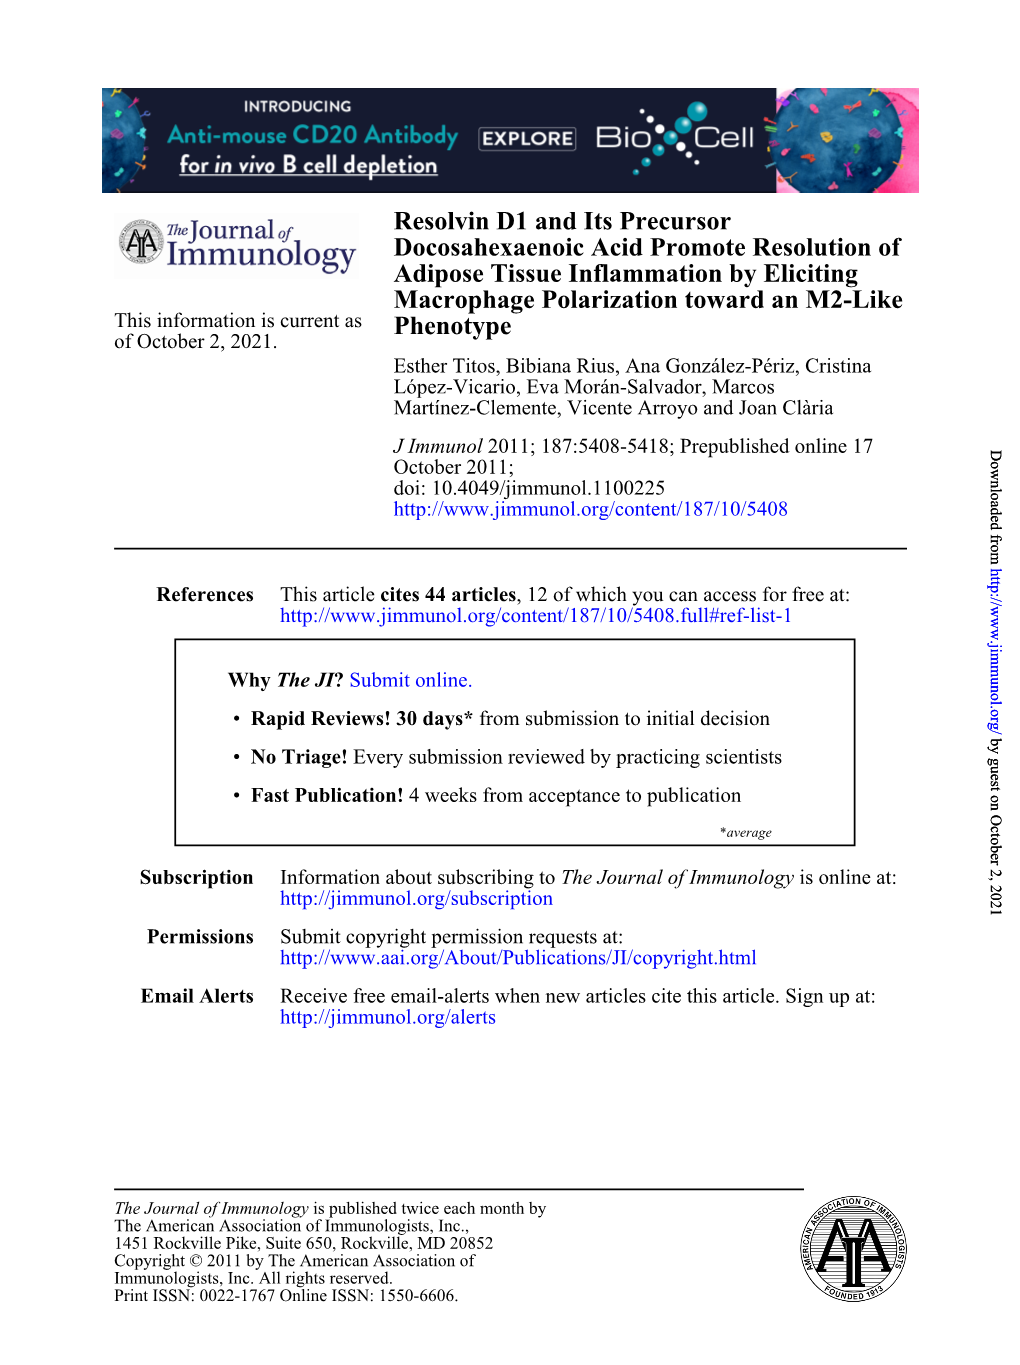 Resolvin D1 and Its Precursor Docosahexaenoic Acid Promote